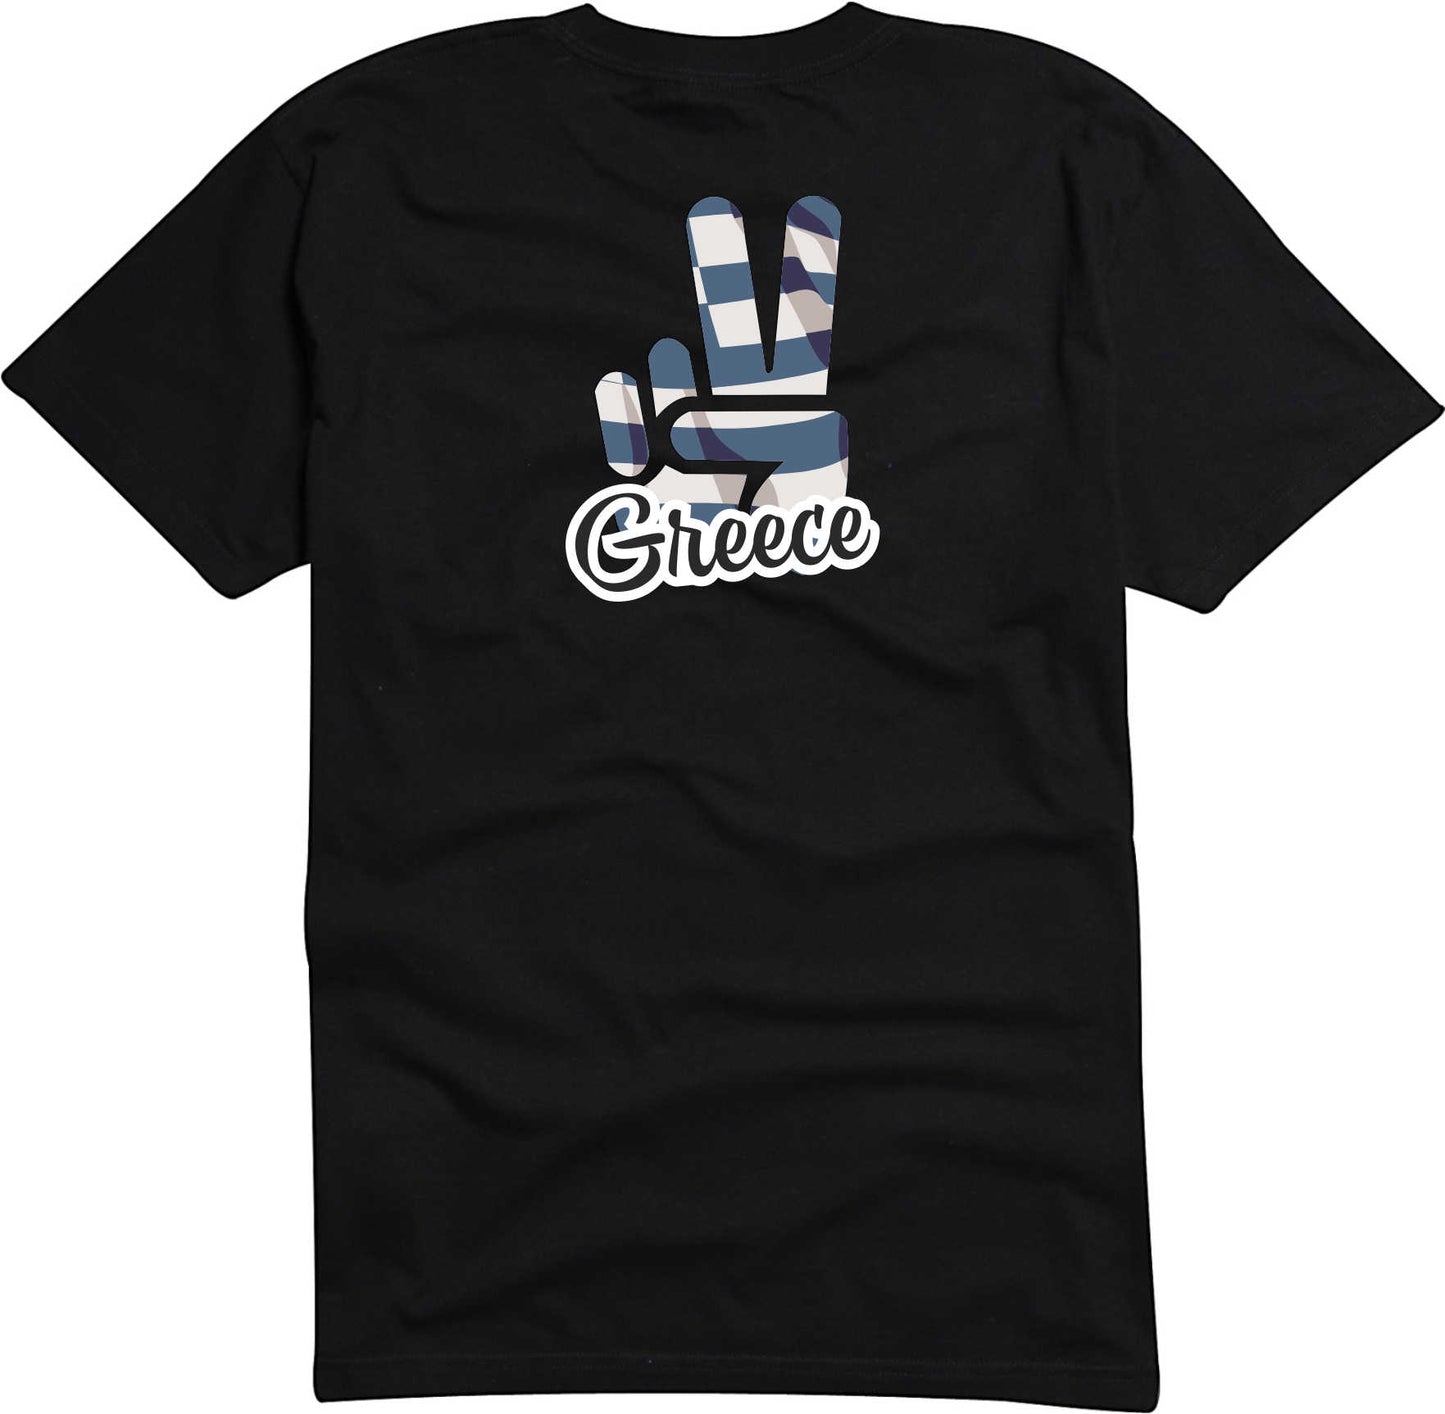 T-Shirt Herren - Victory - Flagge / Fahne - Greece - Sieg